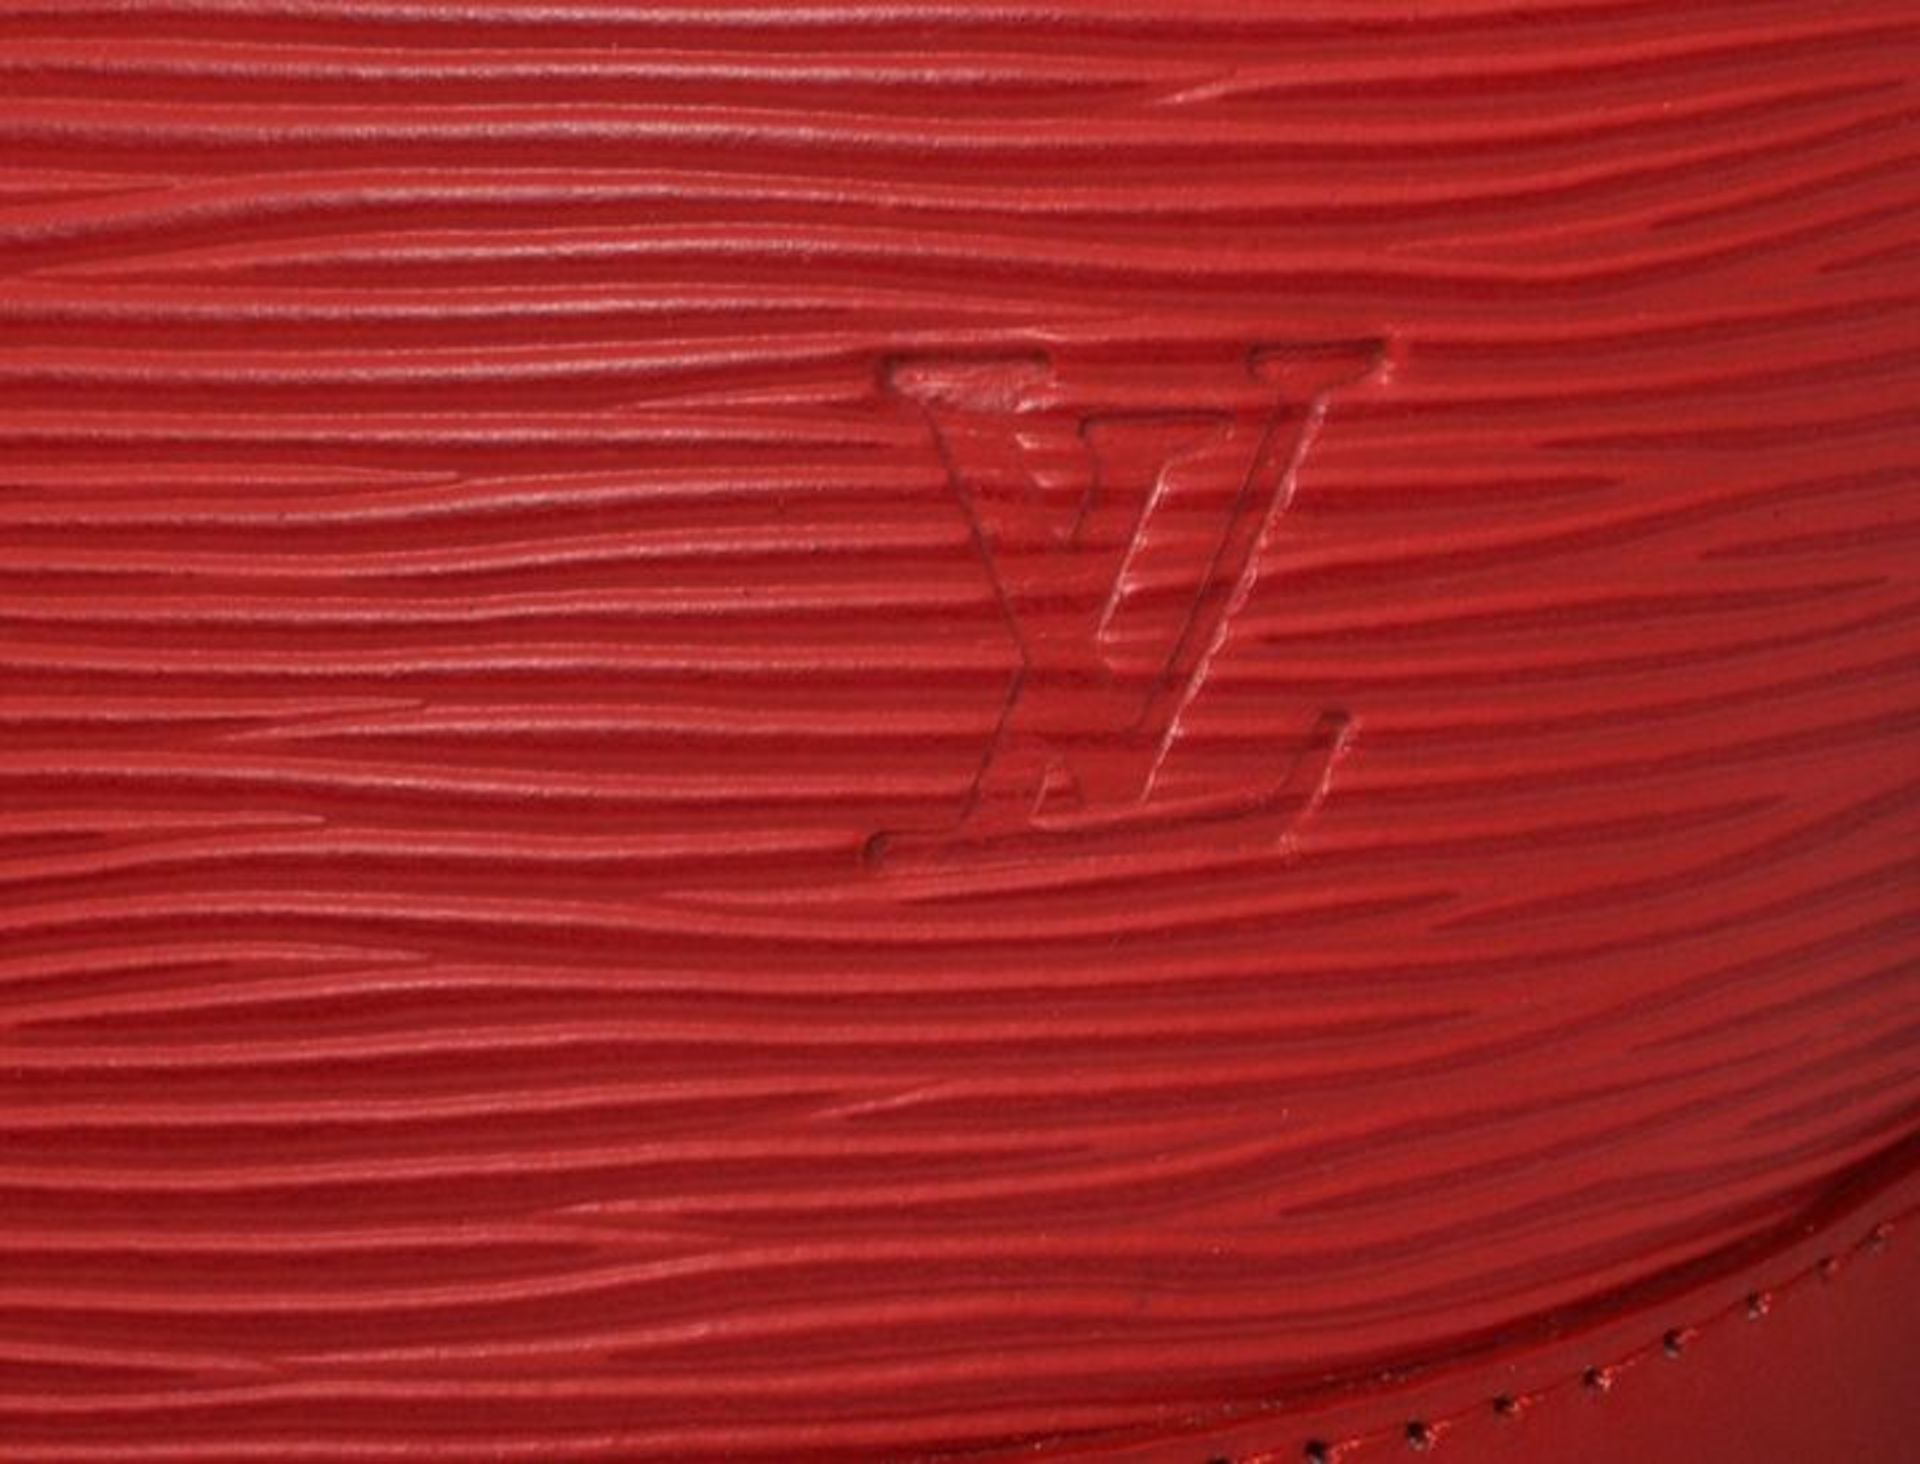 Louis Vuitton - Image 2 of 3